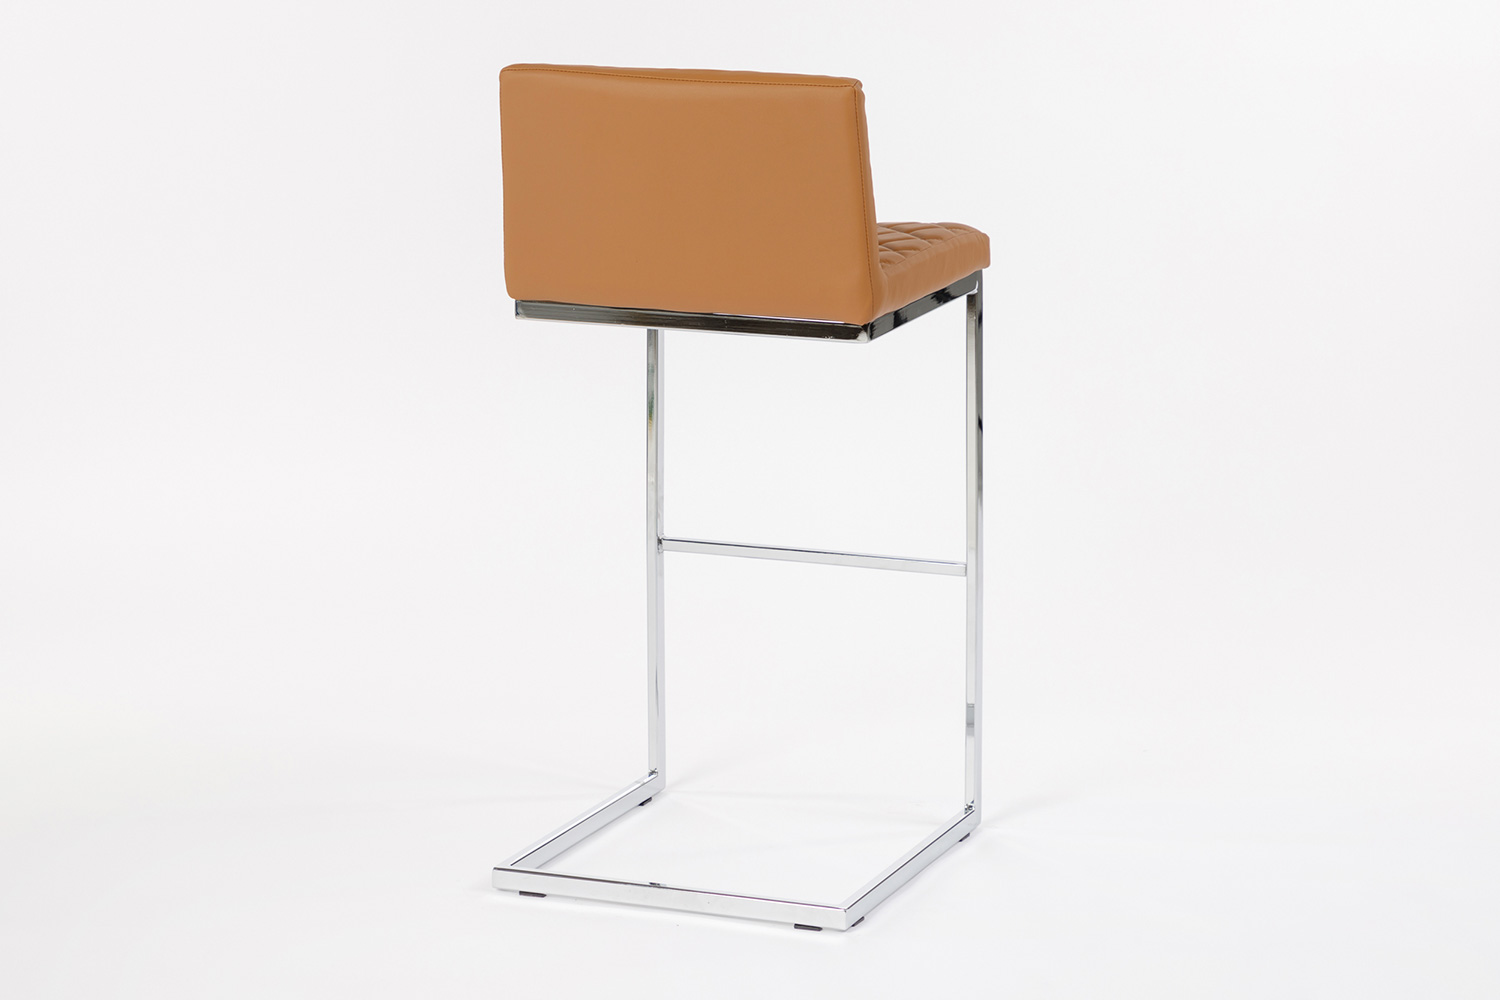 Барный стул Hoff Forex 80336833, хром/коричневый/хром/коричневый